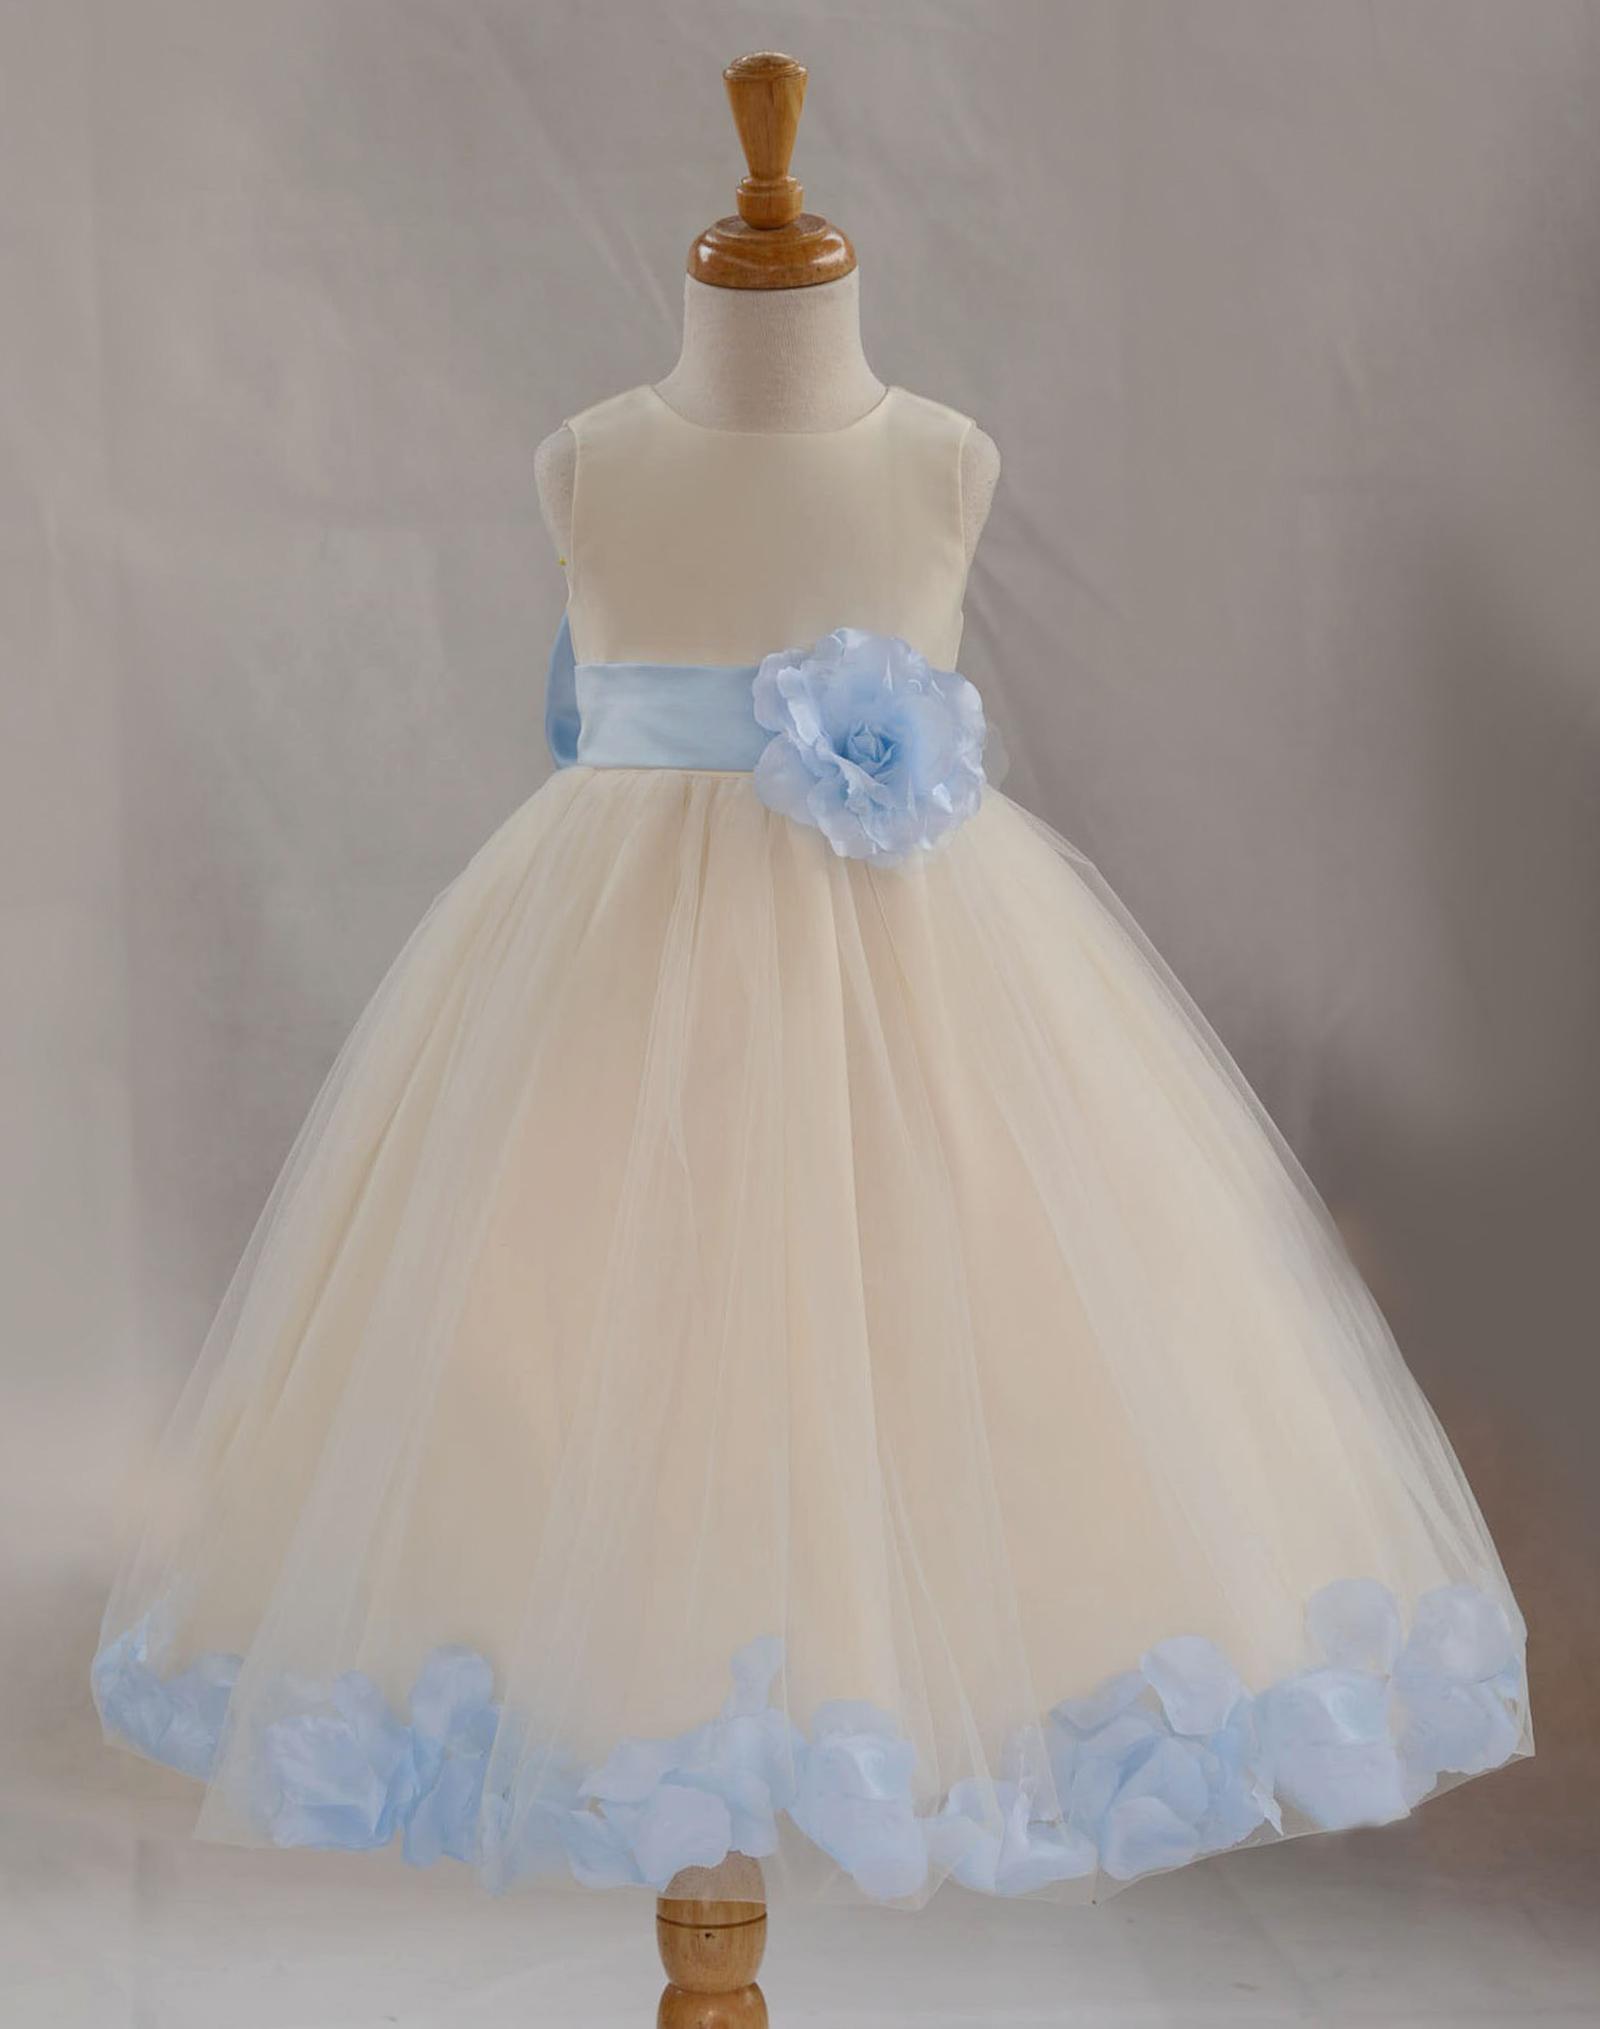 Ekidsbridal Wedding Pageant Ivory Tulle Rose Petals Flower Girl Dress Toddler Elegant Bridesmaid S M 2 4 6 8 10 12 14 16 302t